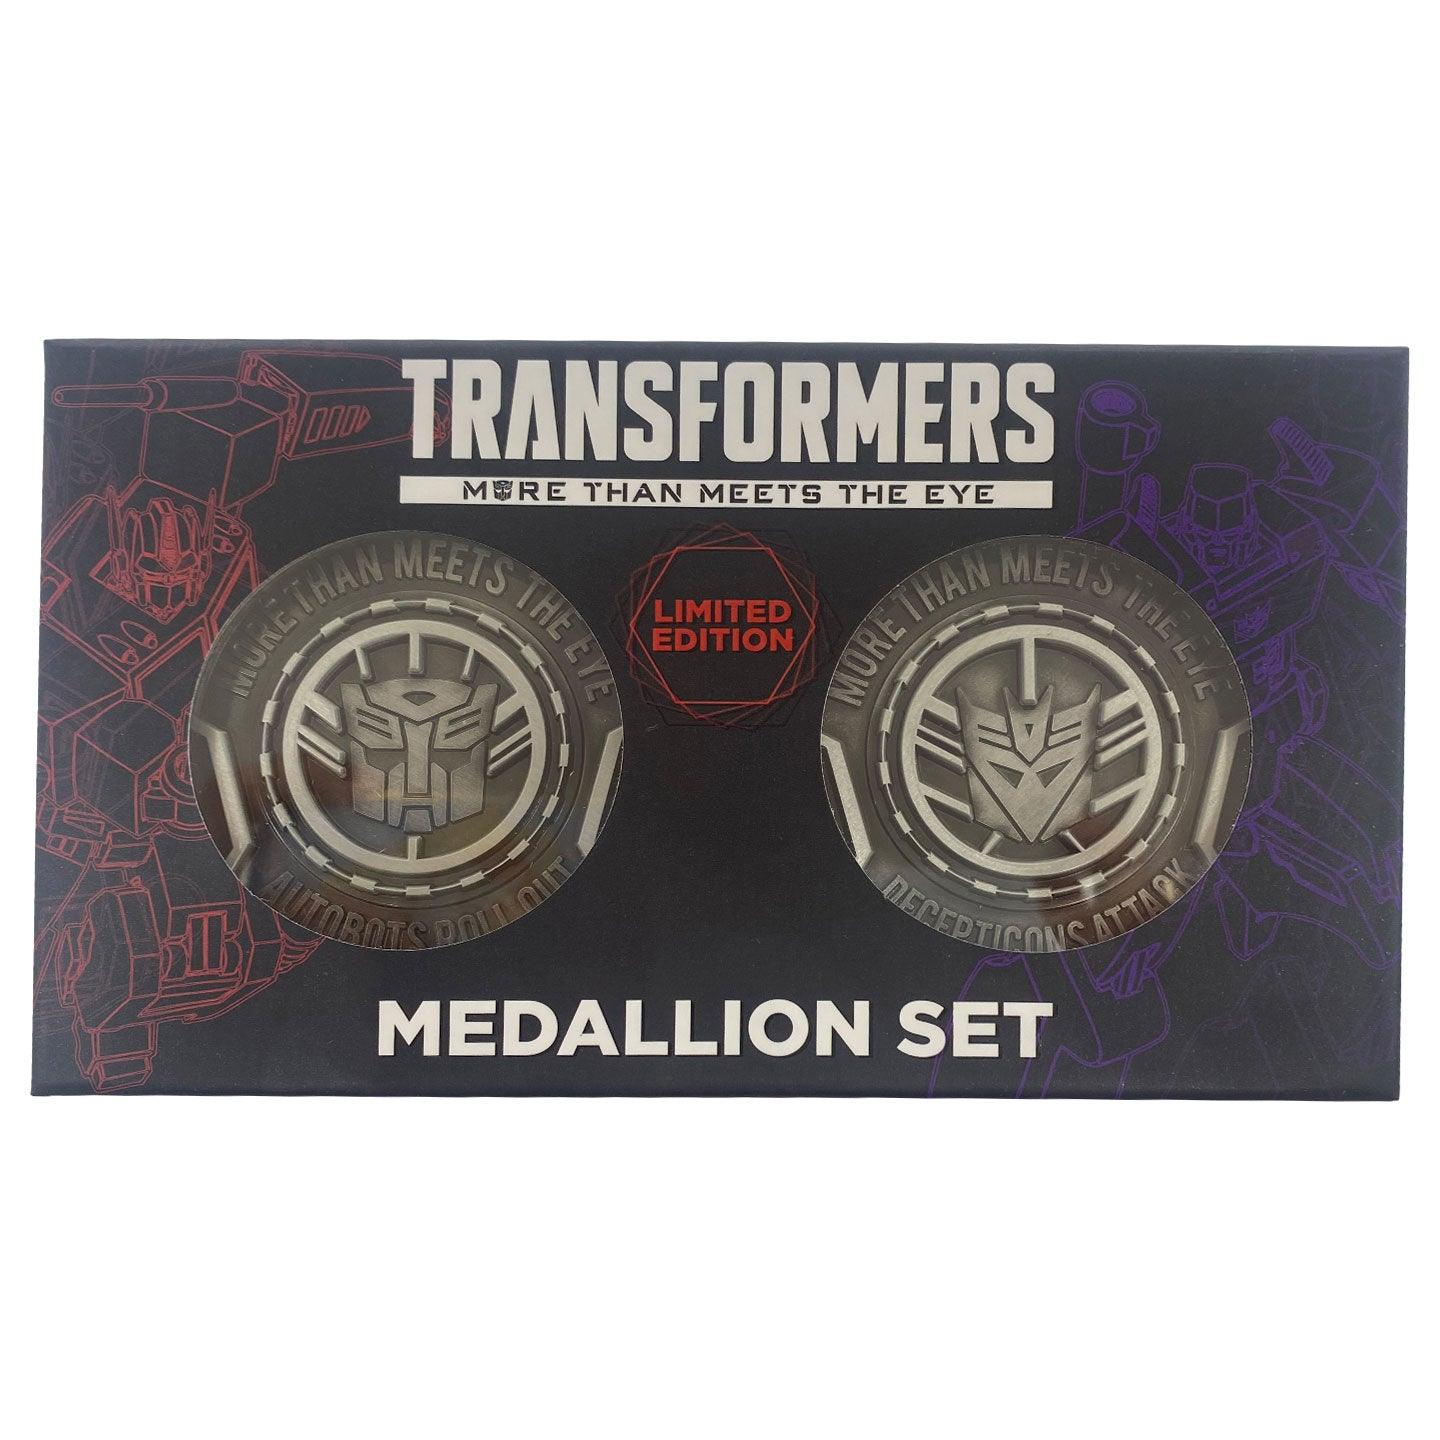 Medallion Transformers - Want a New Gadget